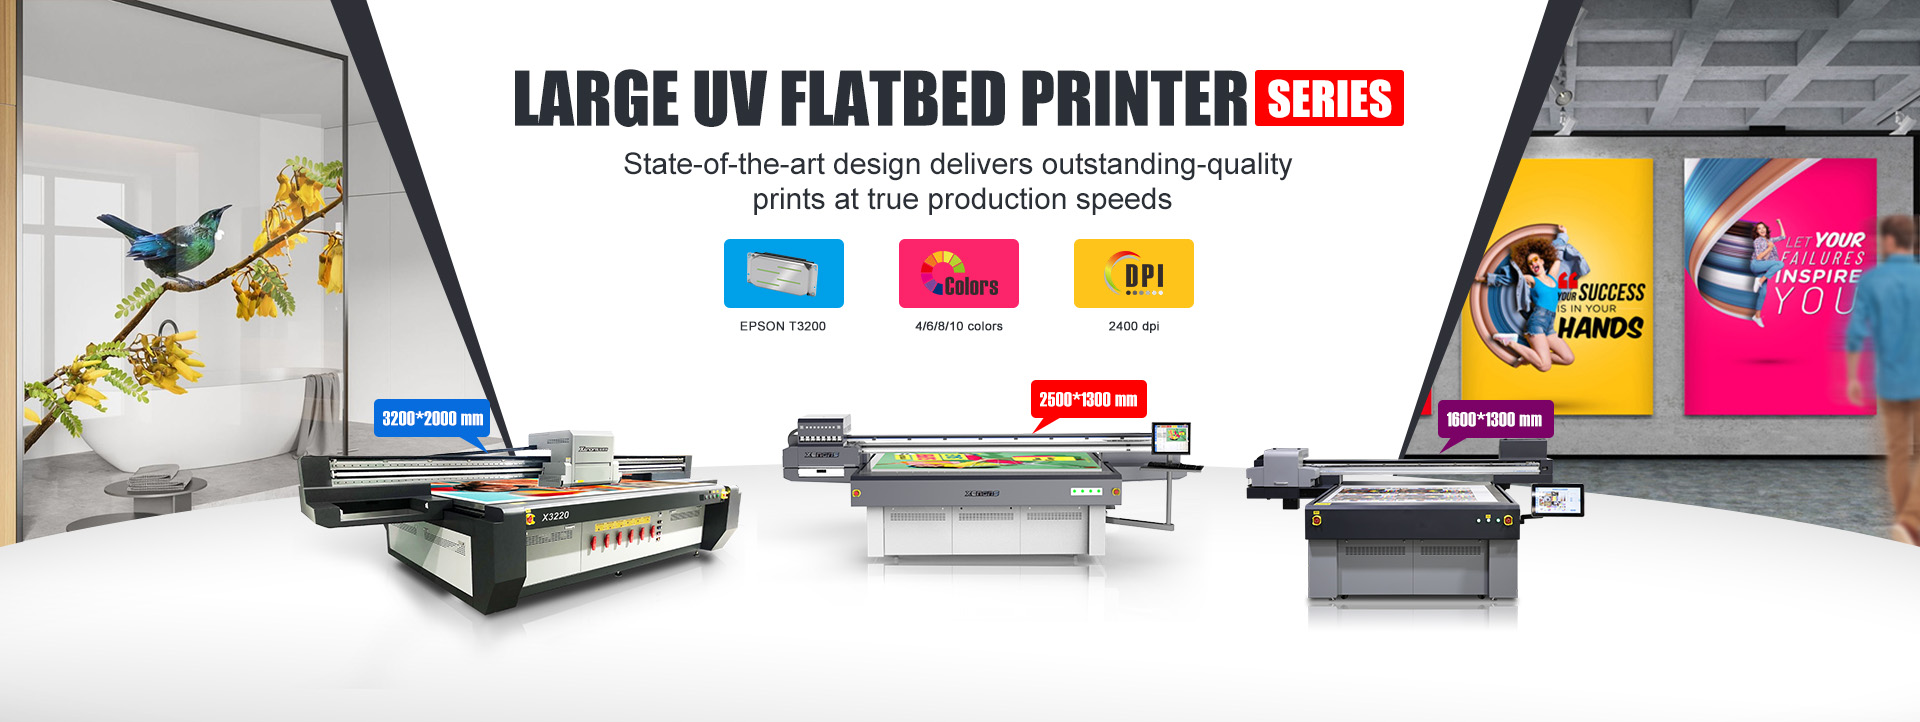 Large UV Flatbed printer